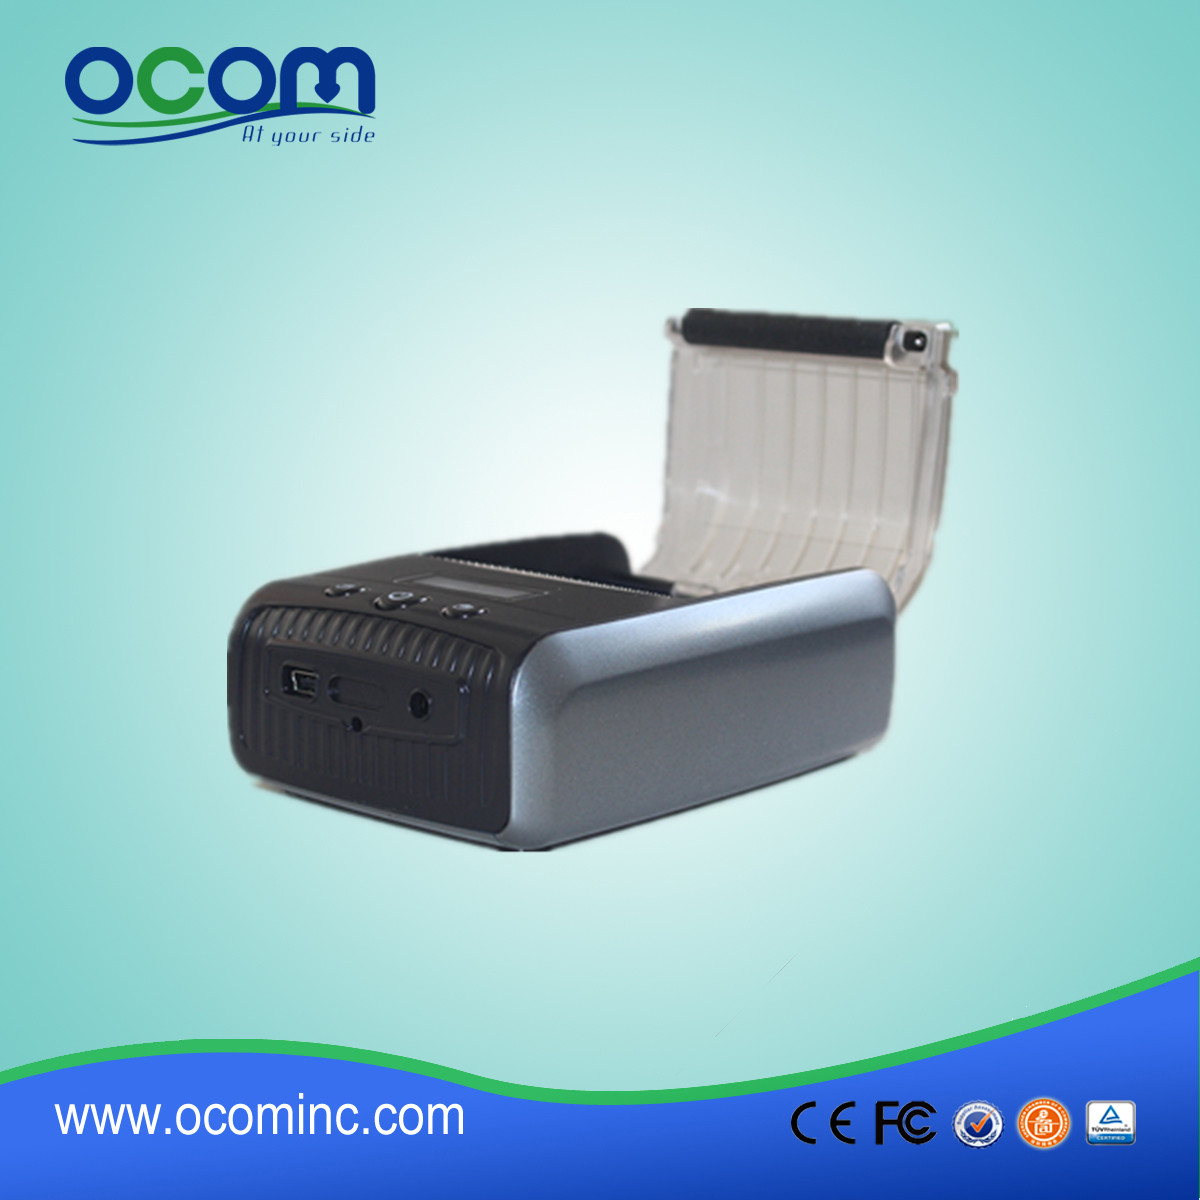 OCBP-M58 58mm mini Bluetooth Thermal Label Printer